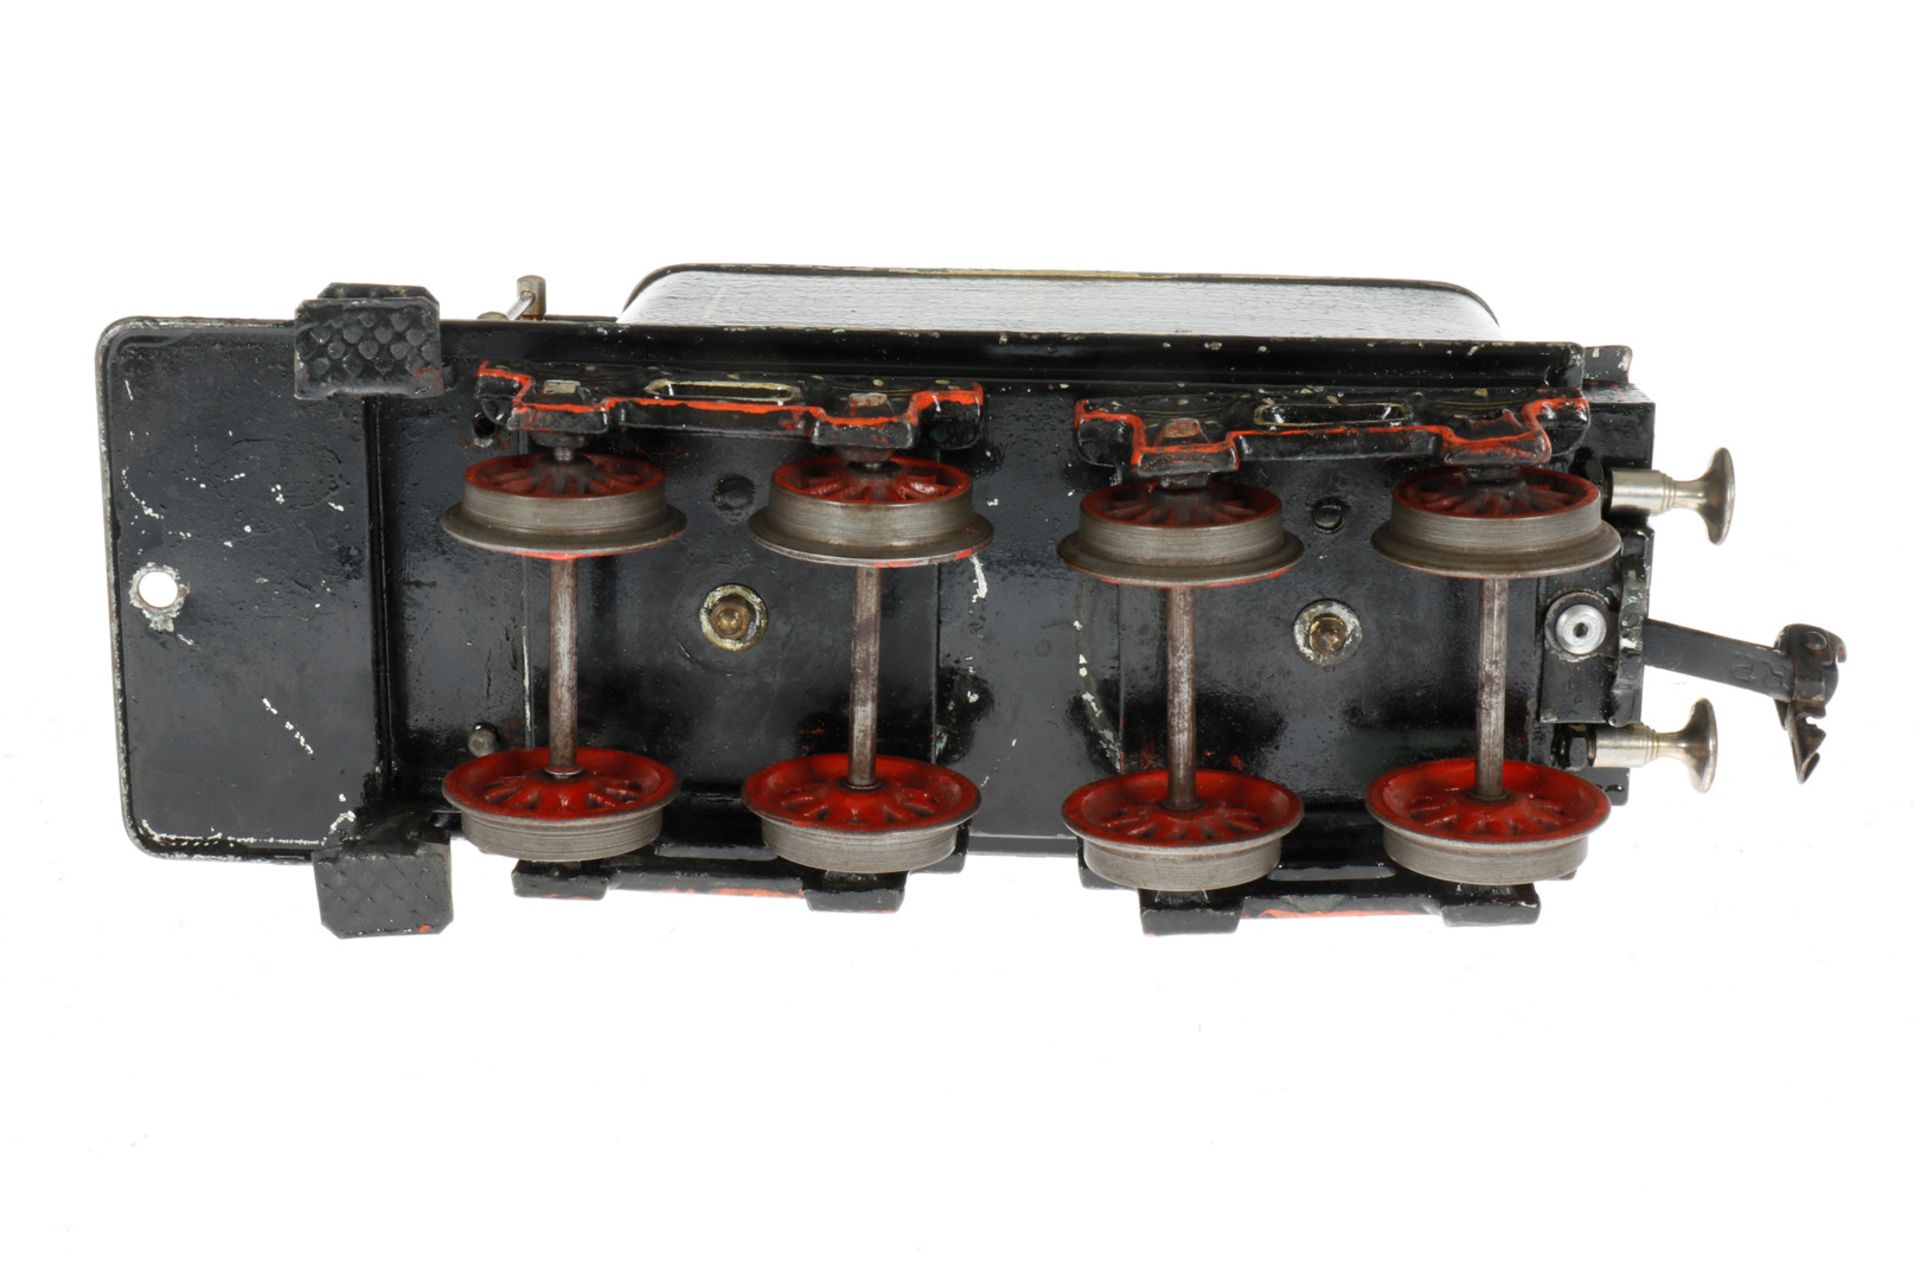 Märklin 2-B Dampflok FE 1021, S 1, uralt, mit Doppel-Uhrwerk, je intakt, schwarz, HL, mit Tender, - Image 9 of 9